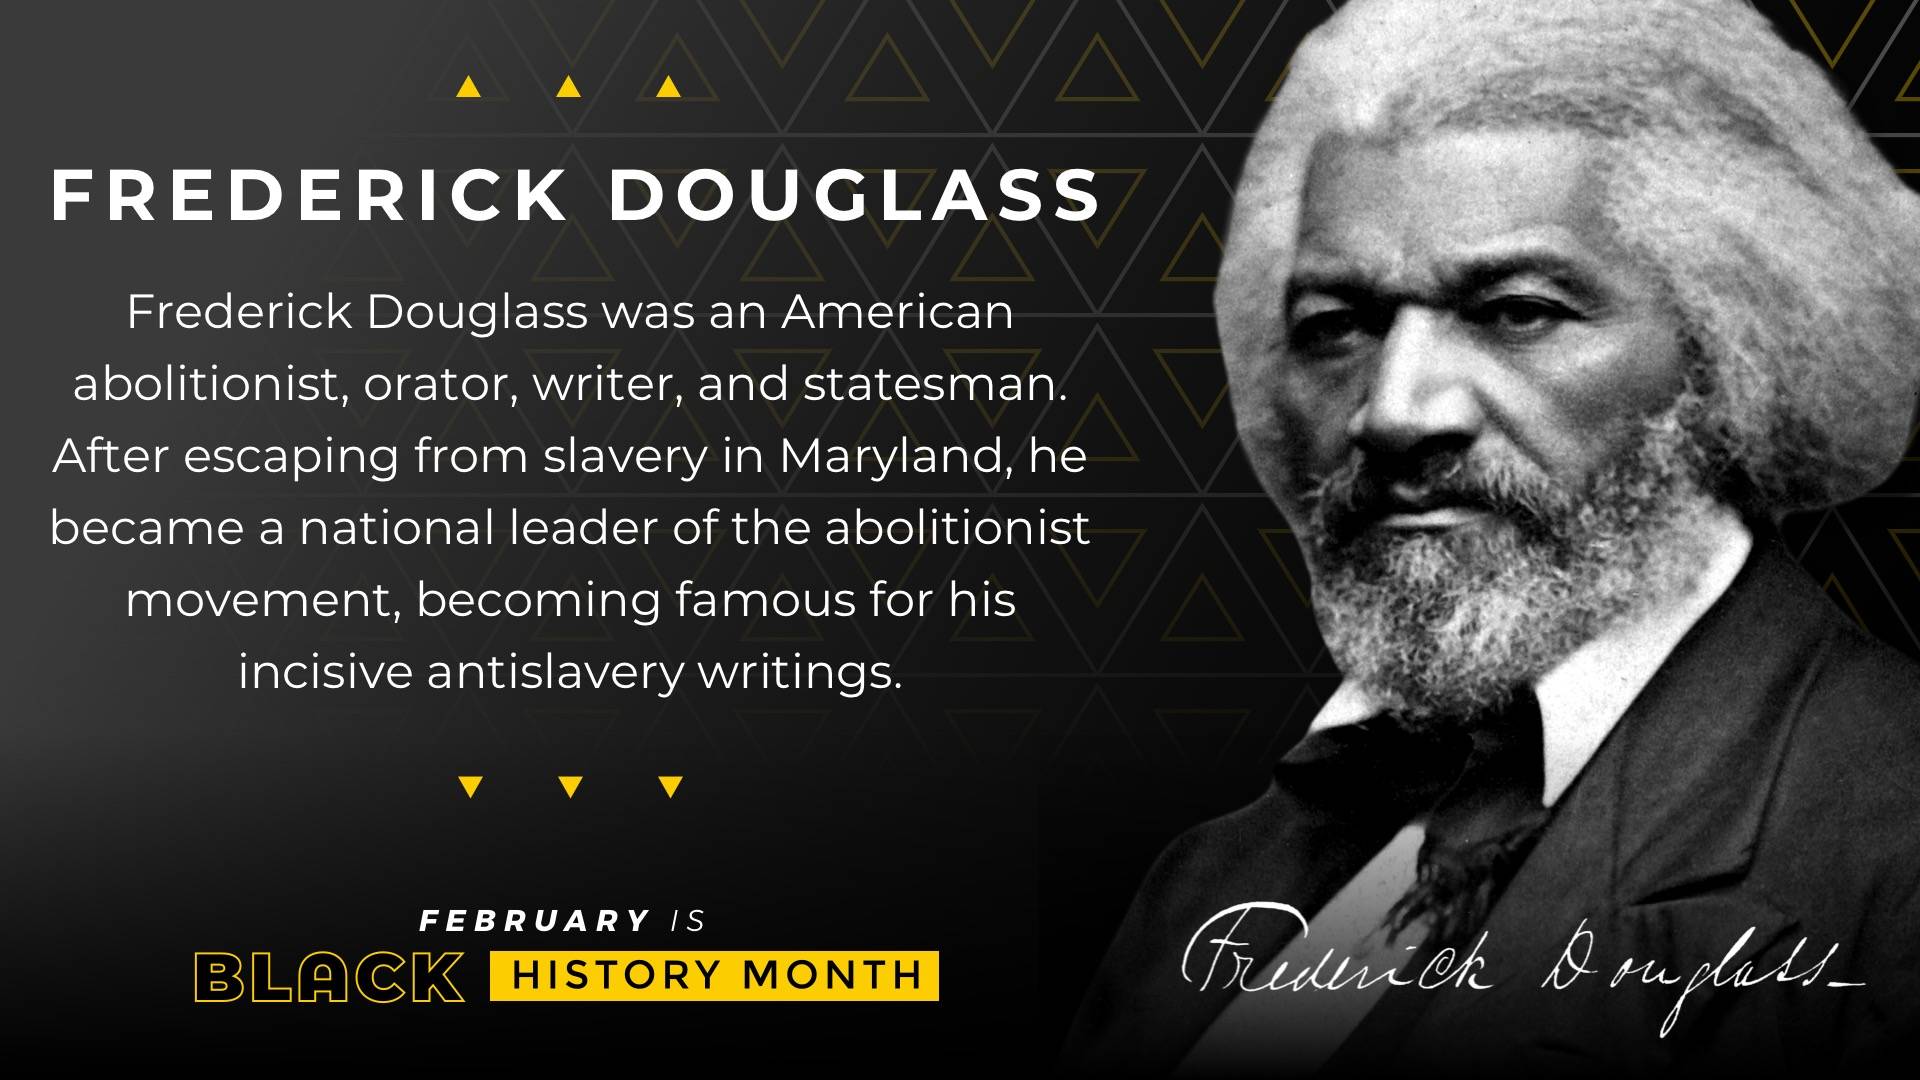 Black History Month - Frederick Douglass Digital Signage Template